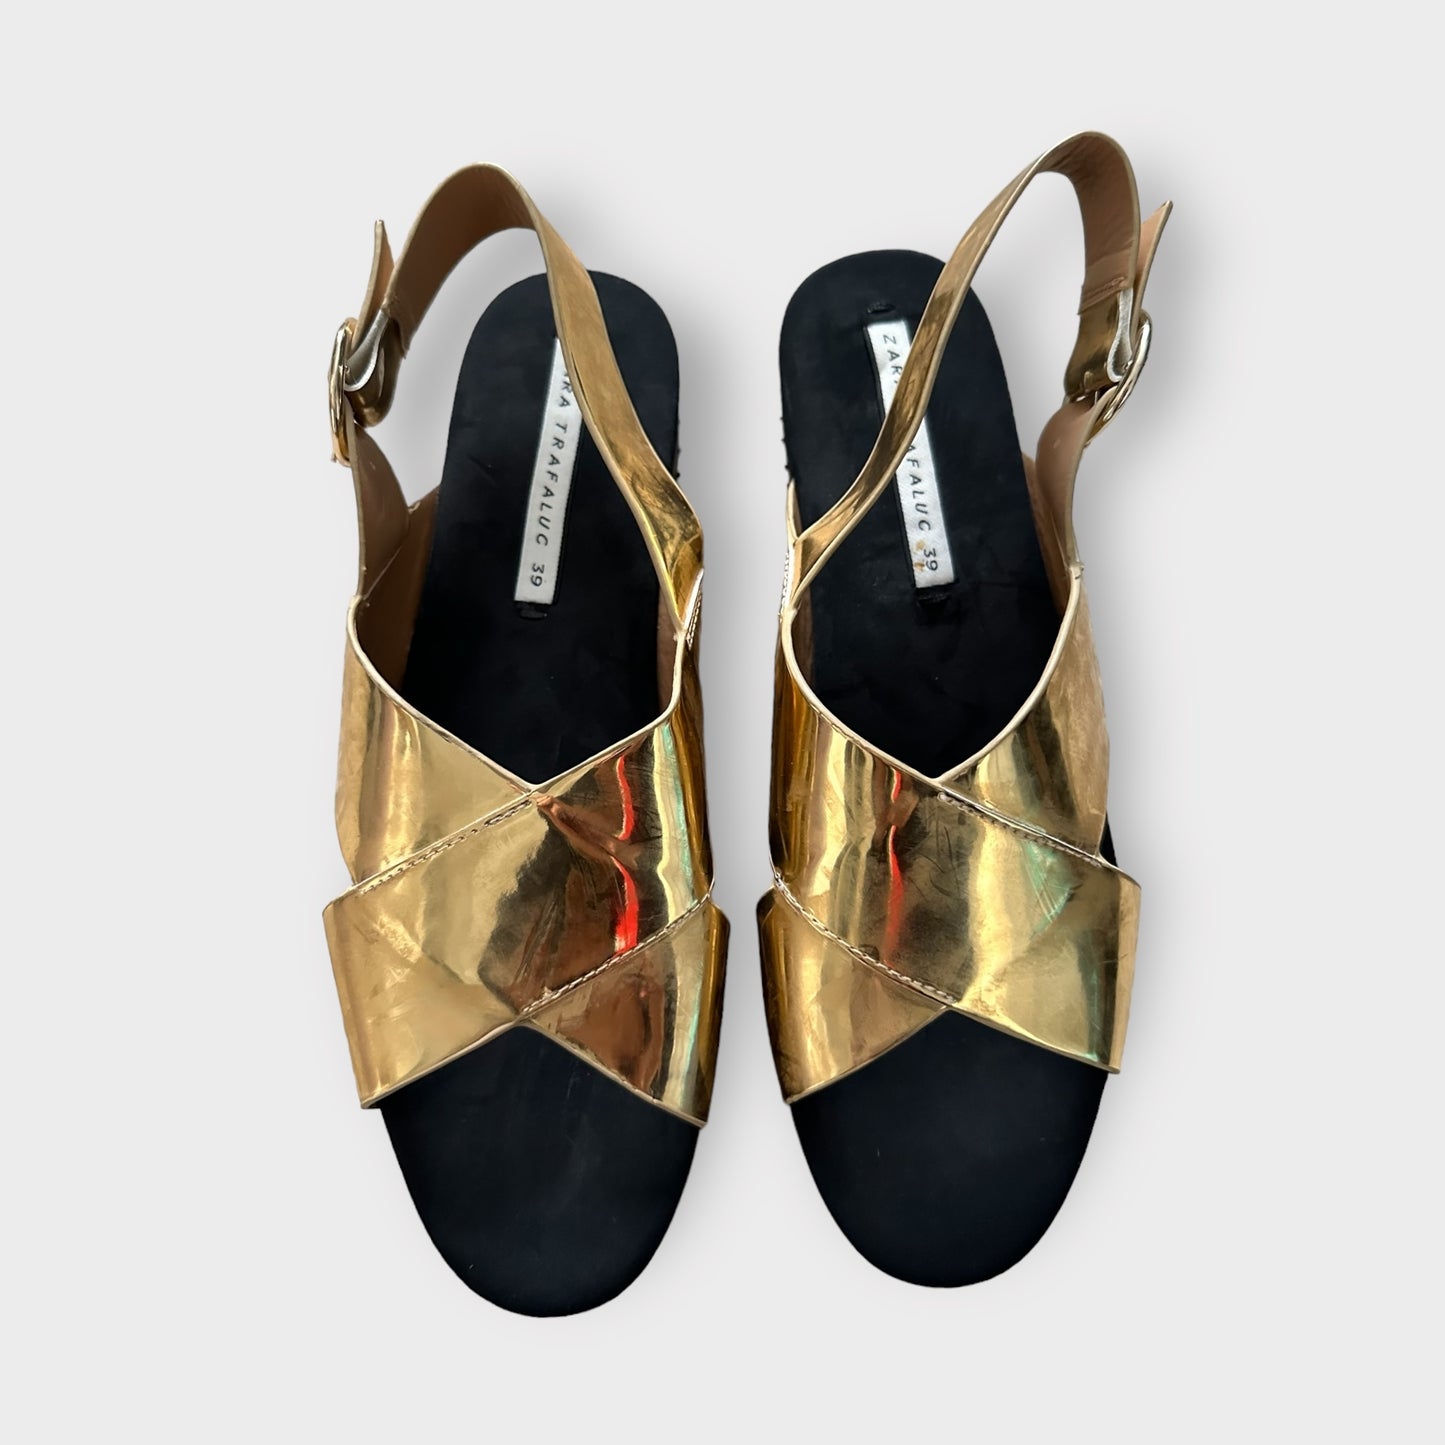 Zara chrome metallic cross over platform flatform sandals shoes new UK 6 EU 39